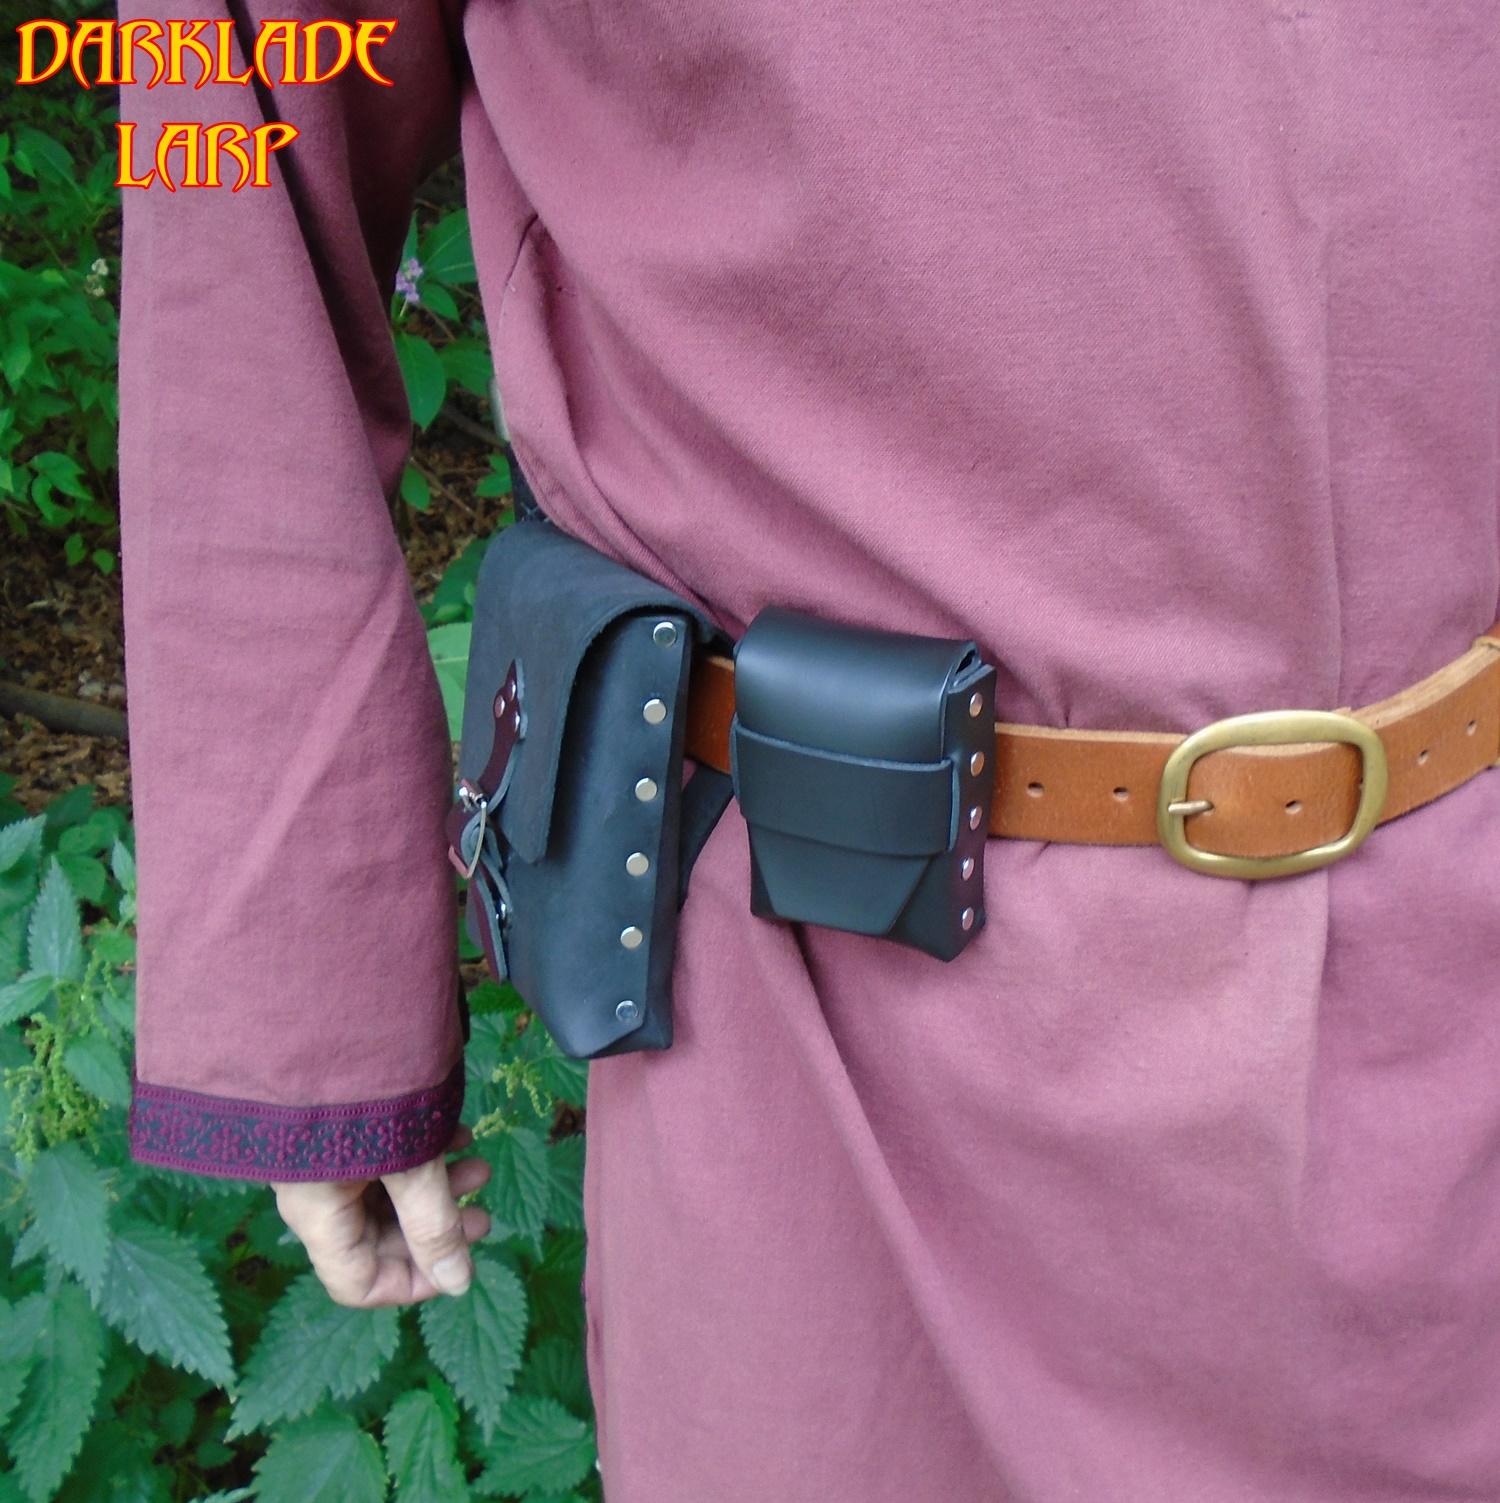 Small rectangular pouch being worn on a belt